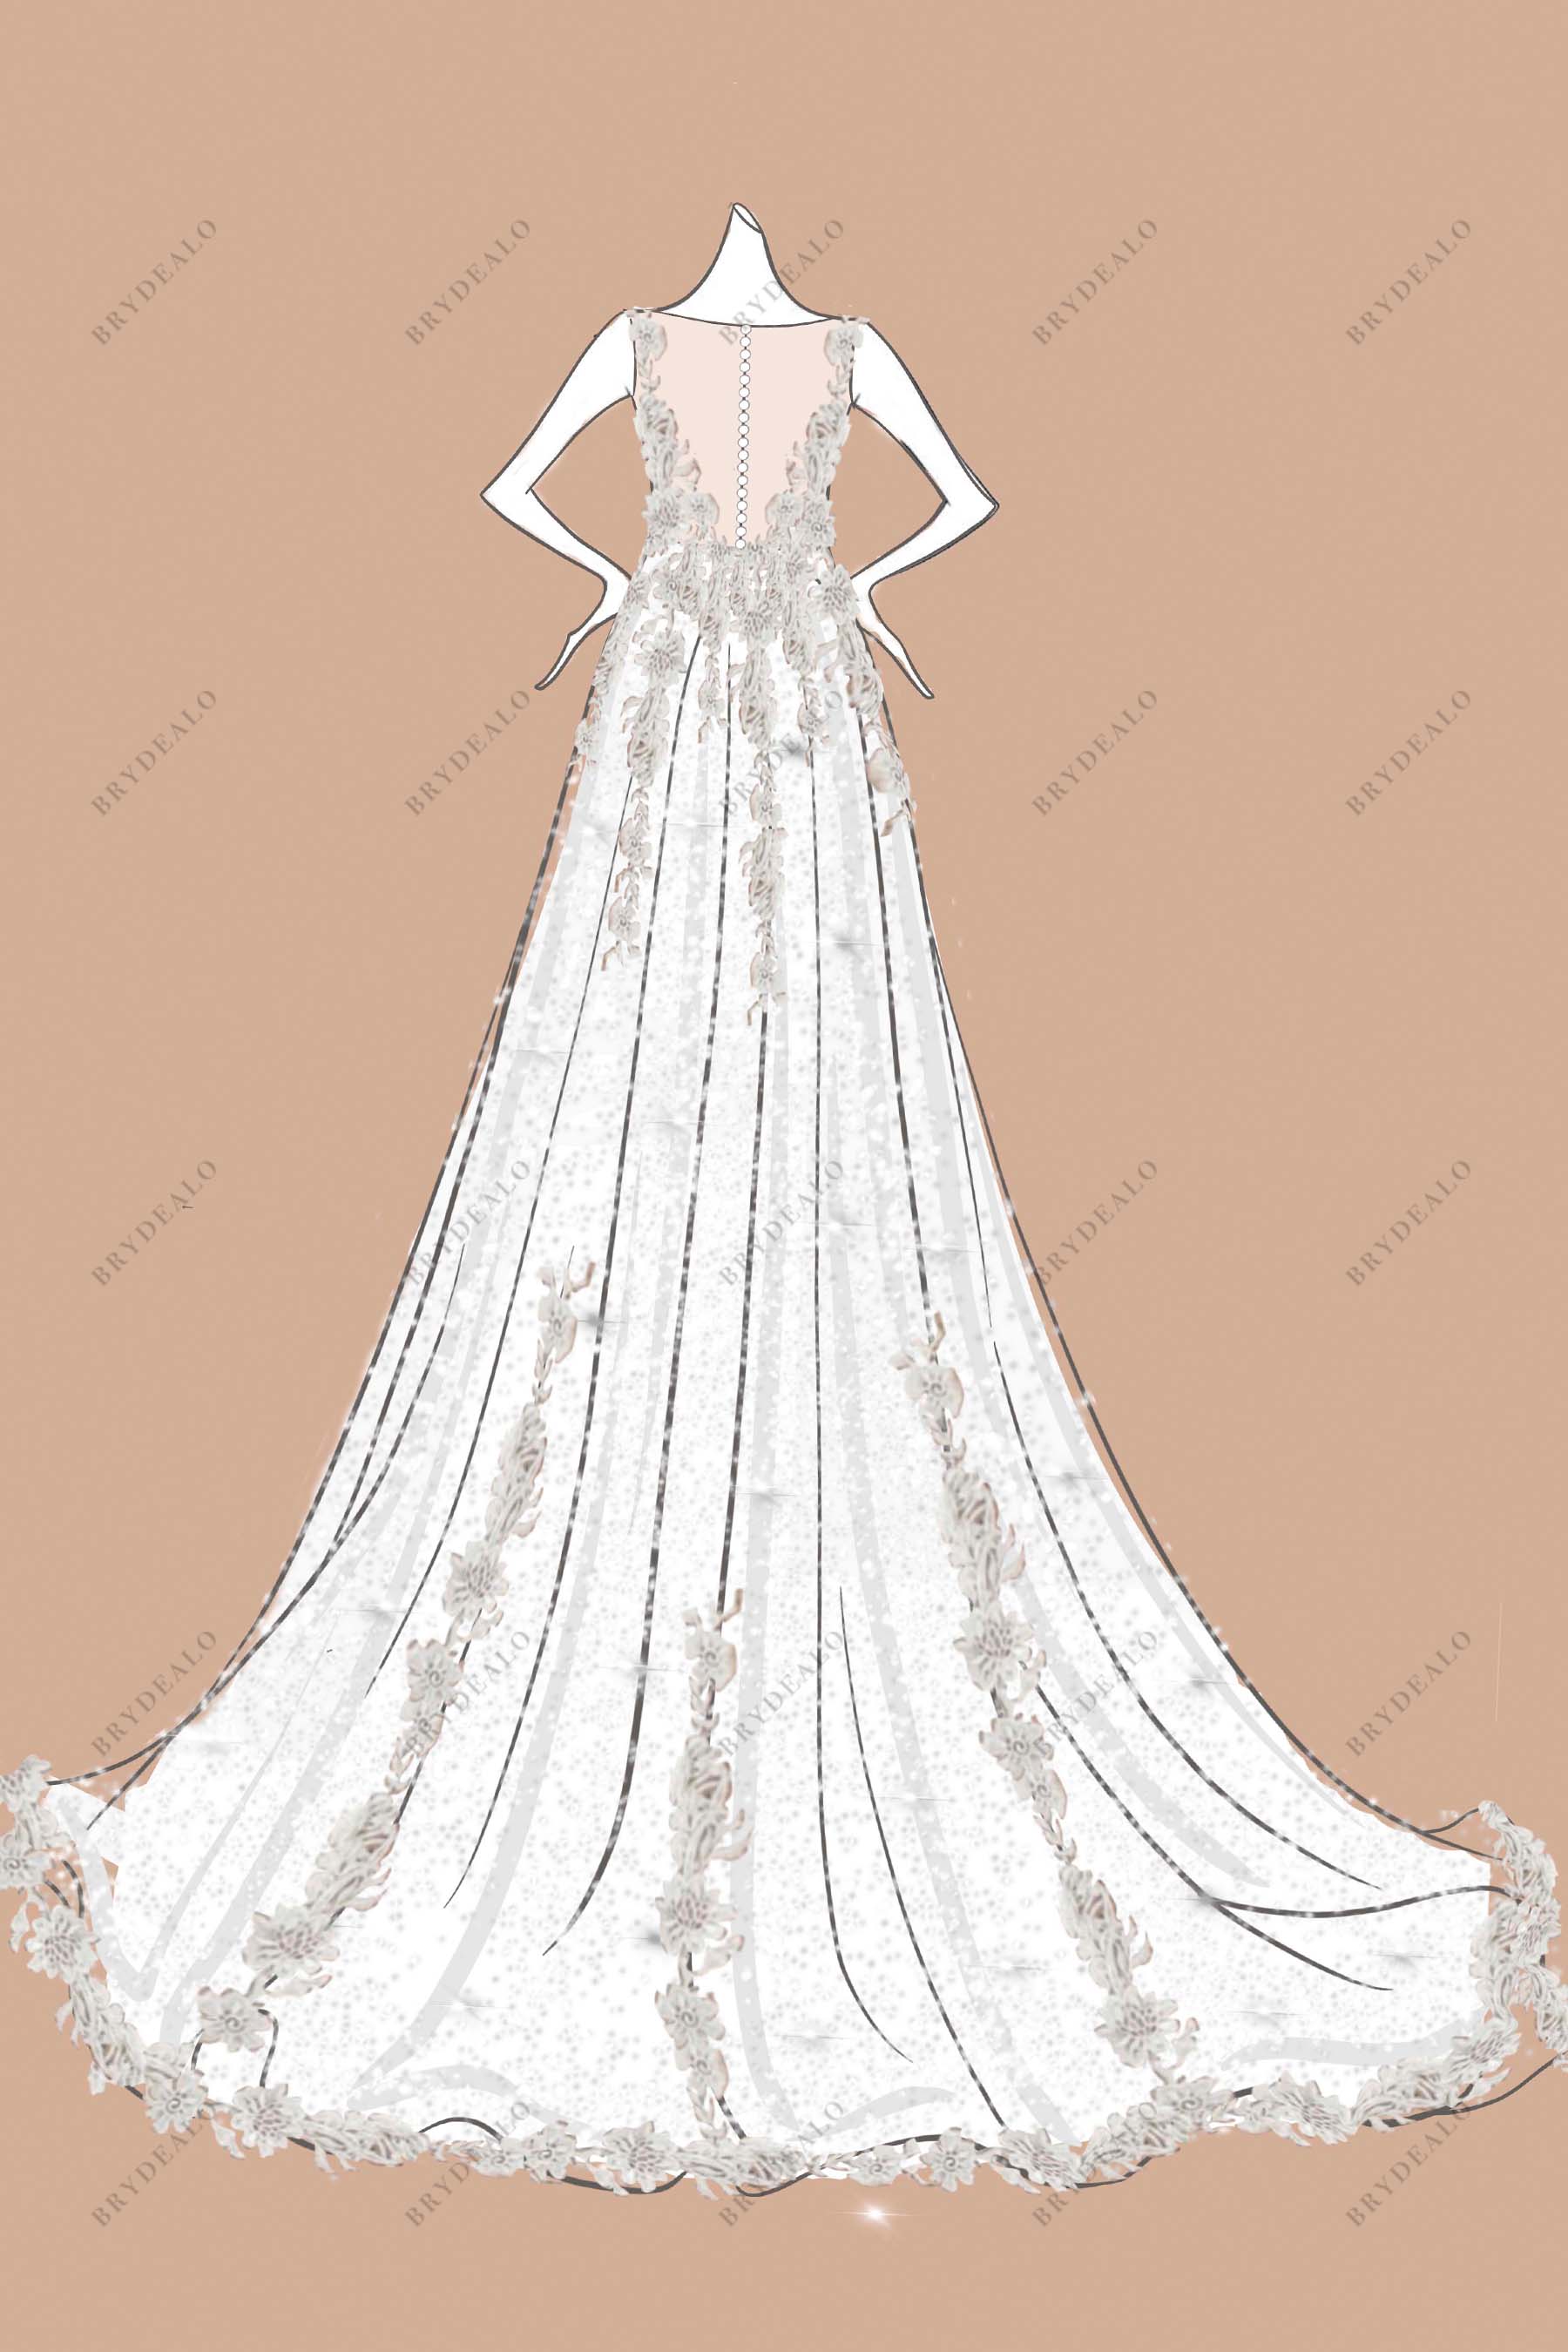 Wedding Dress Sketch Vector Illustration on White Background Stock  Vector  Illustration of floral dress 63310029